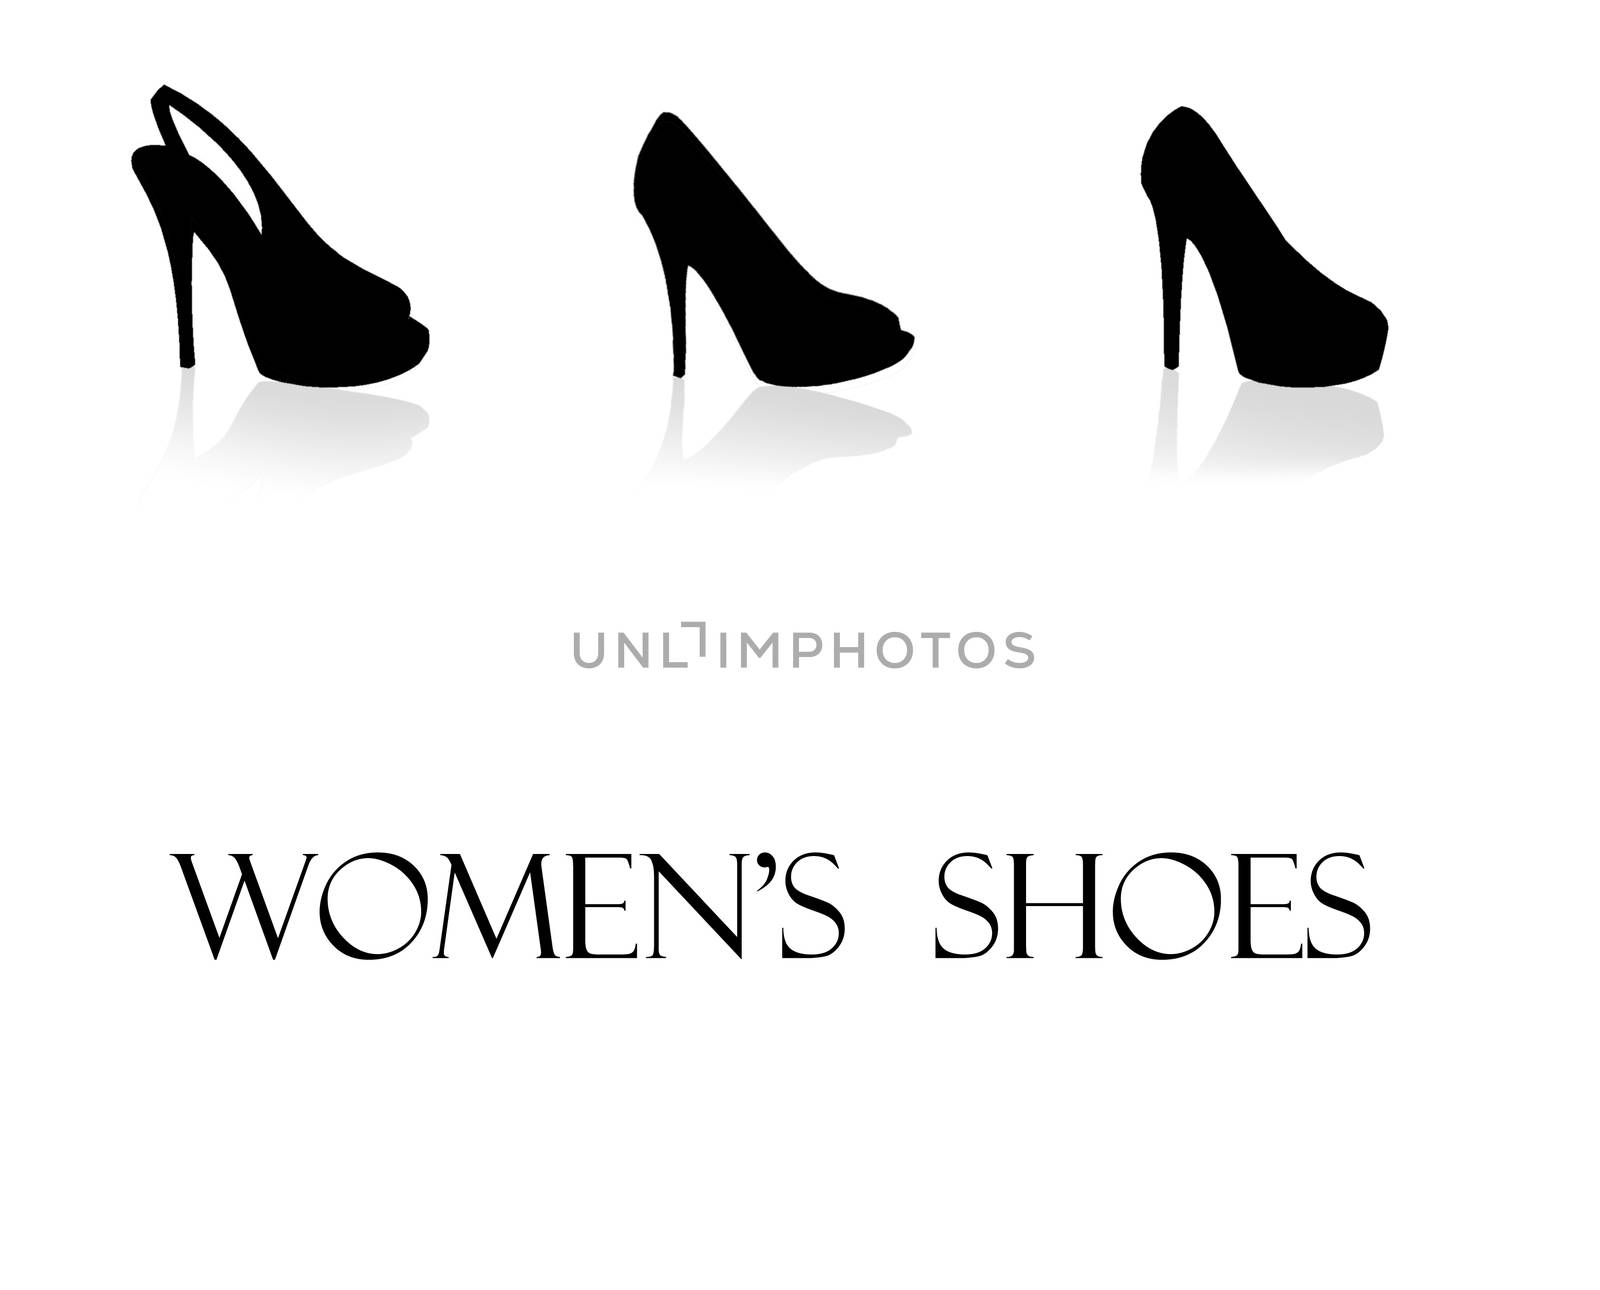 Set of beautiful modern woman shoes by Dddaca